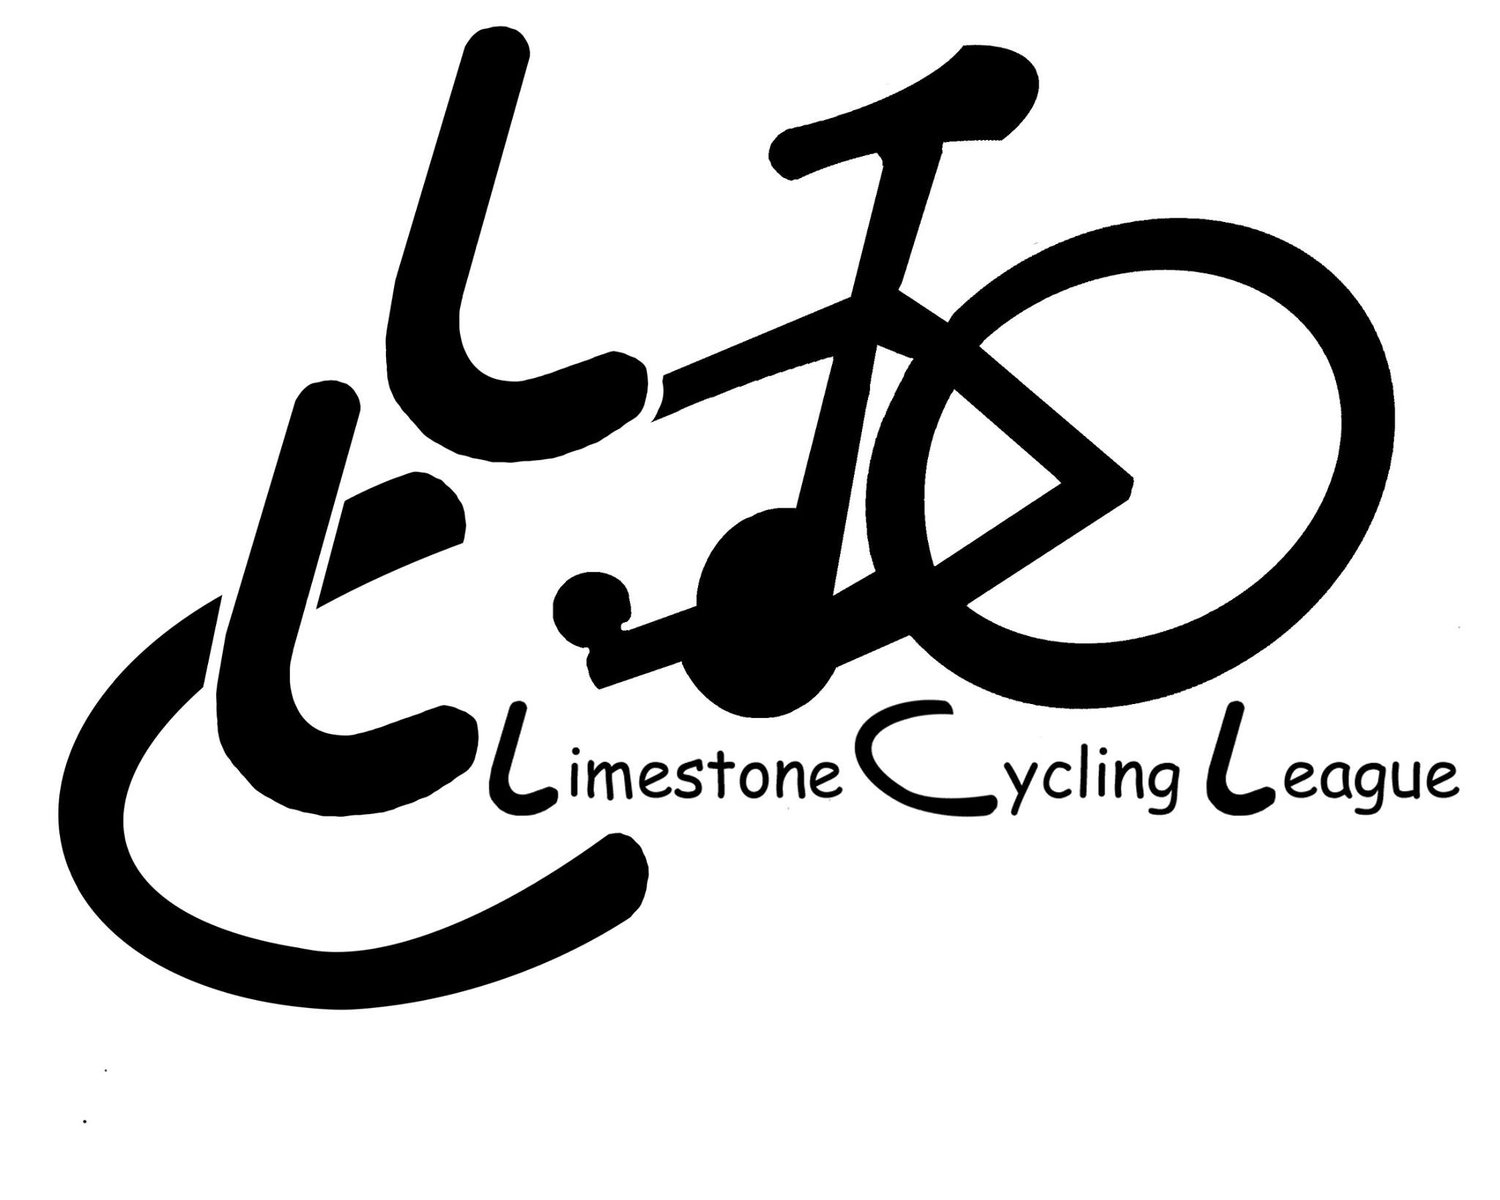 Limestone Cycling League